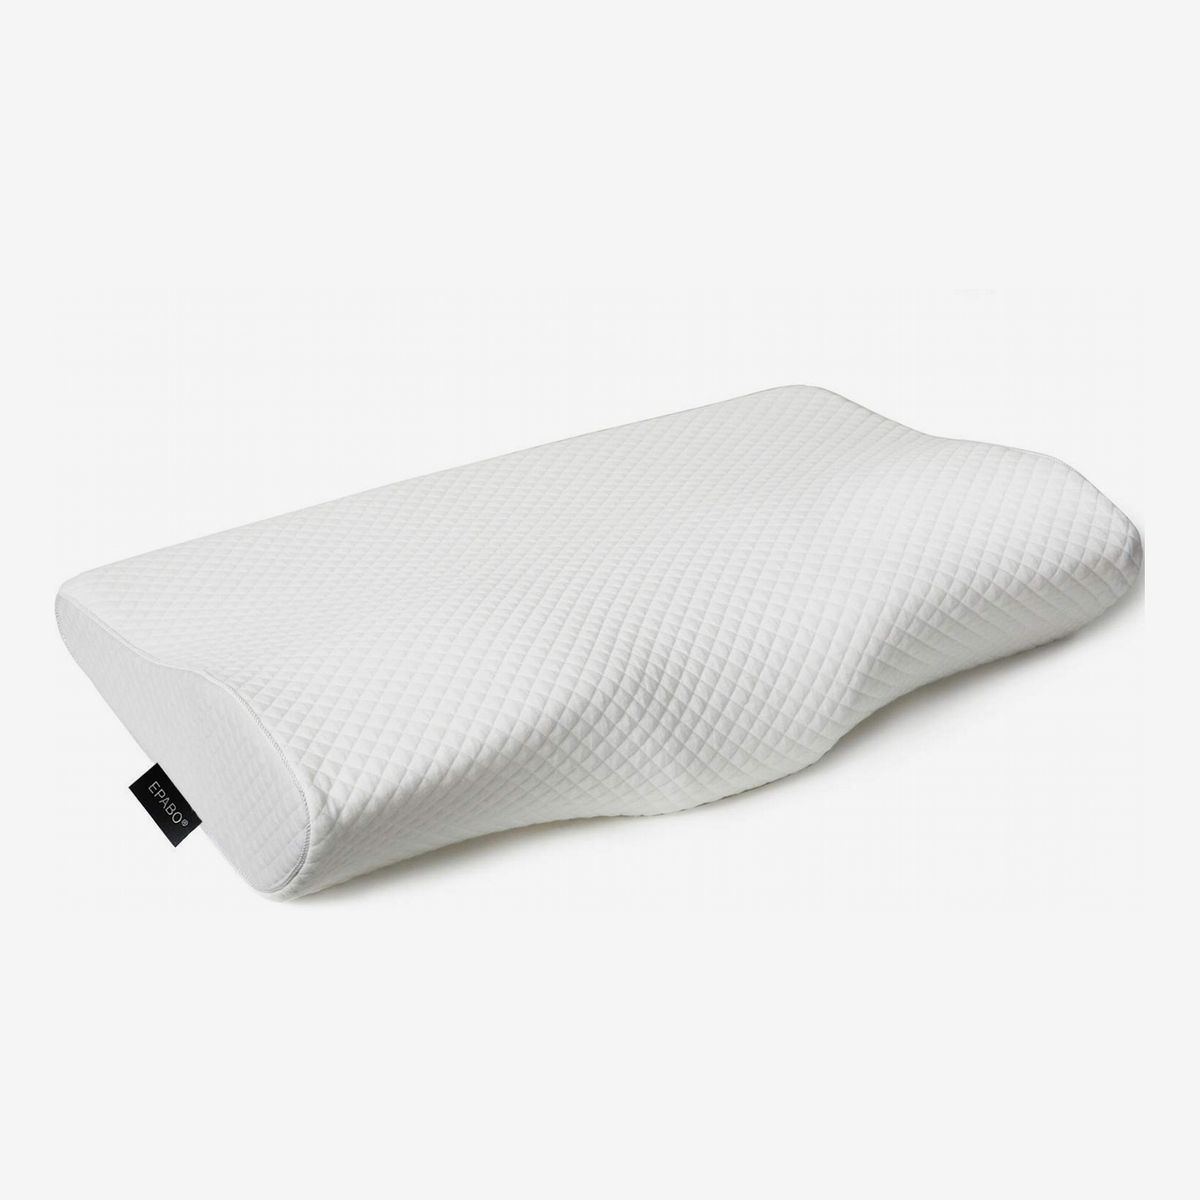 Ortopedysk Cervical Memory Foam Pillow